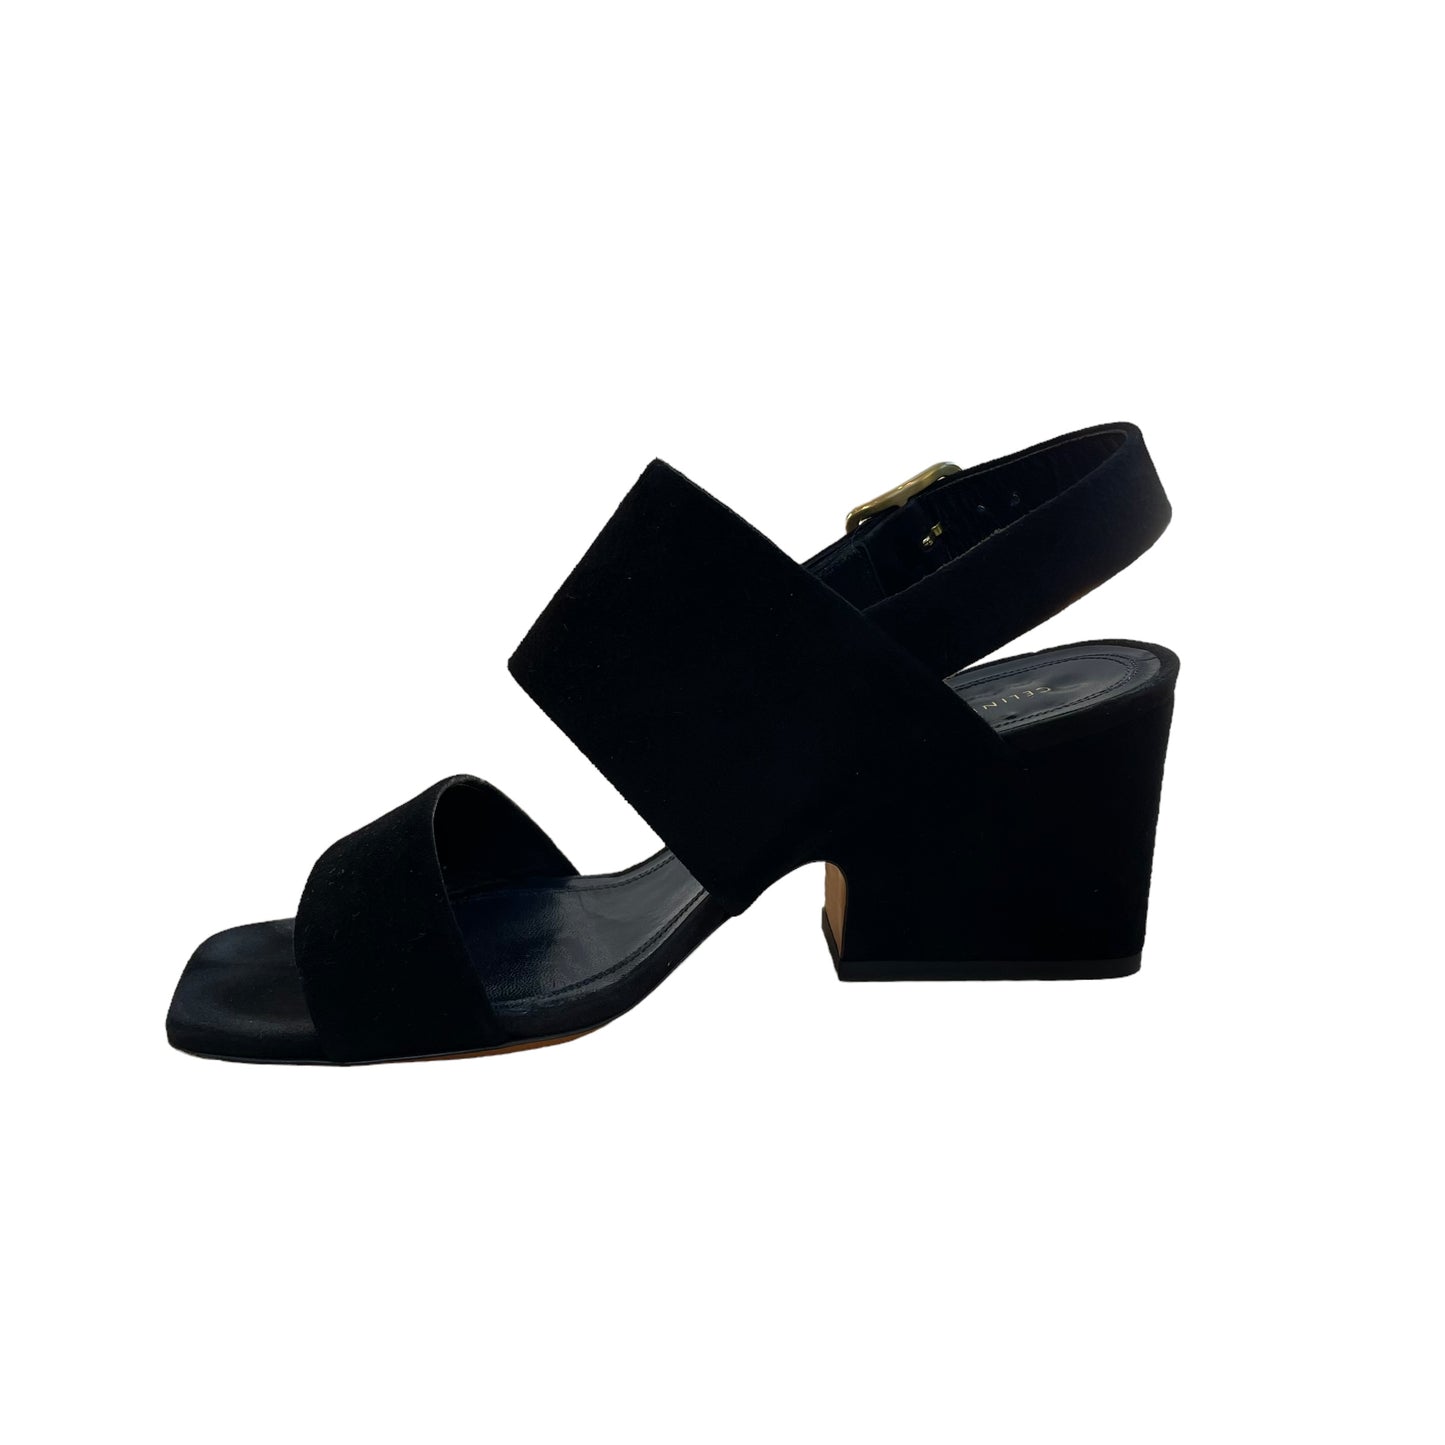 Black Suede Heeled Sandals - 7